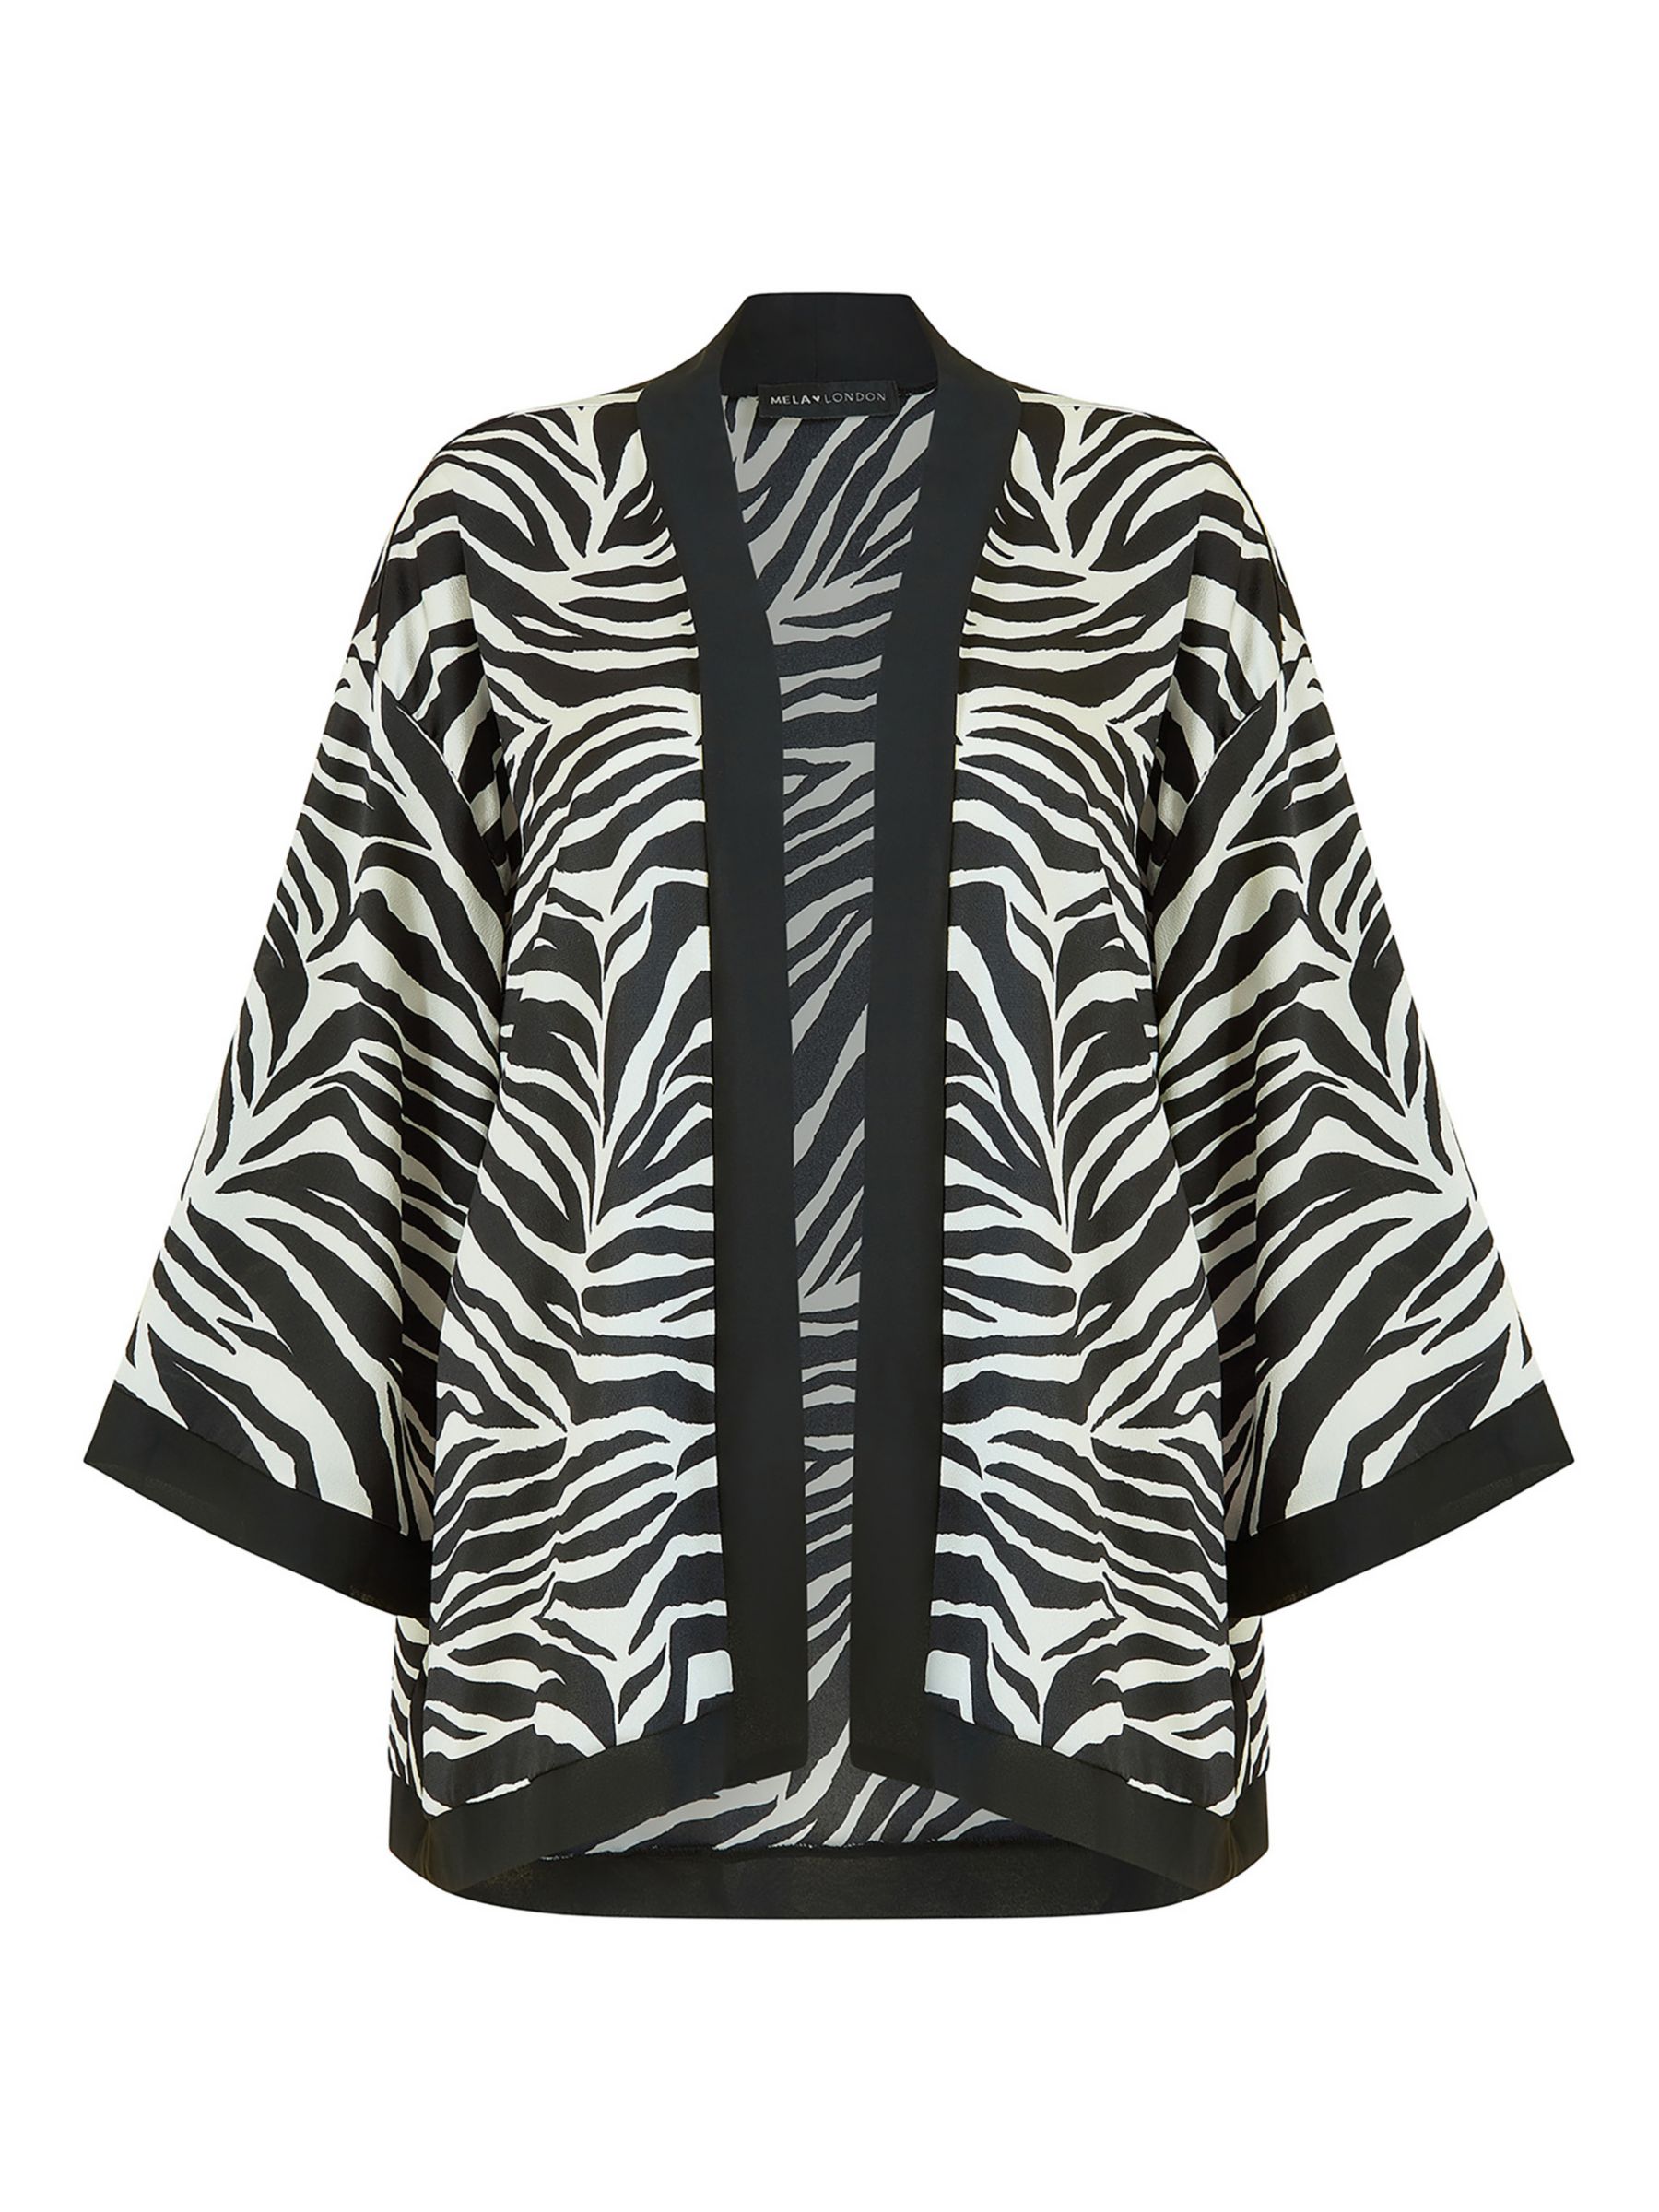 Mela London Zebra Print Satin Kimono, Black/White at John Lewis & Partners